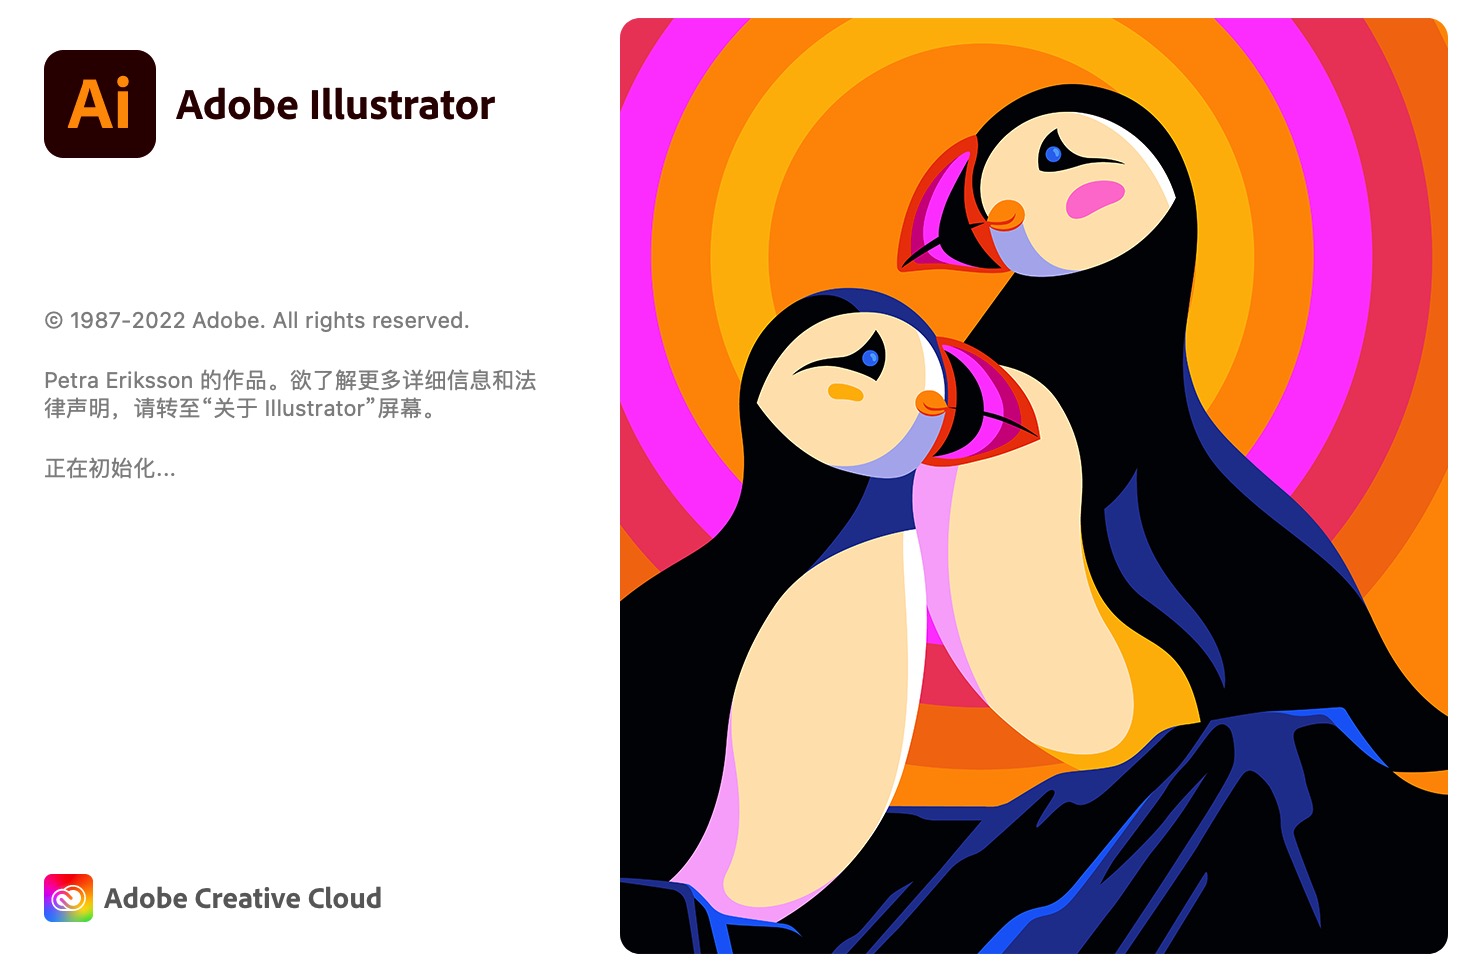 Adobe mac996 Illustrator 2022